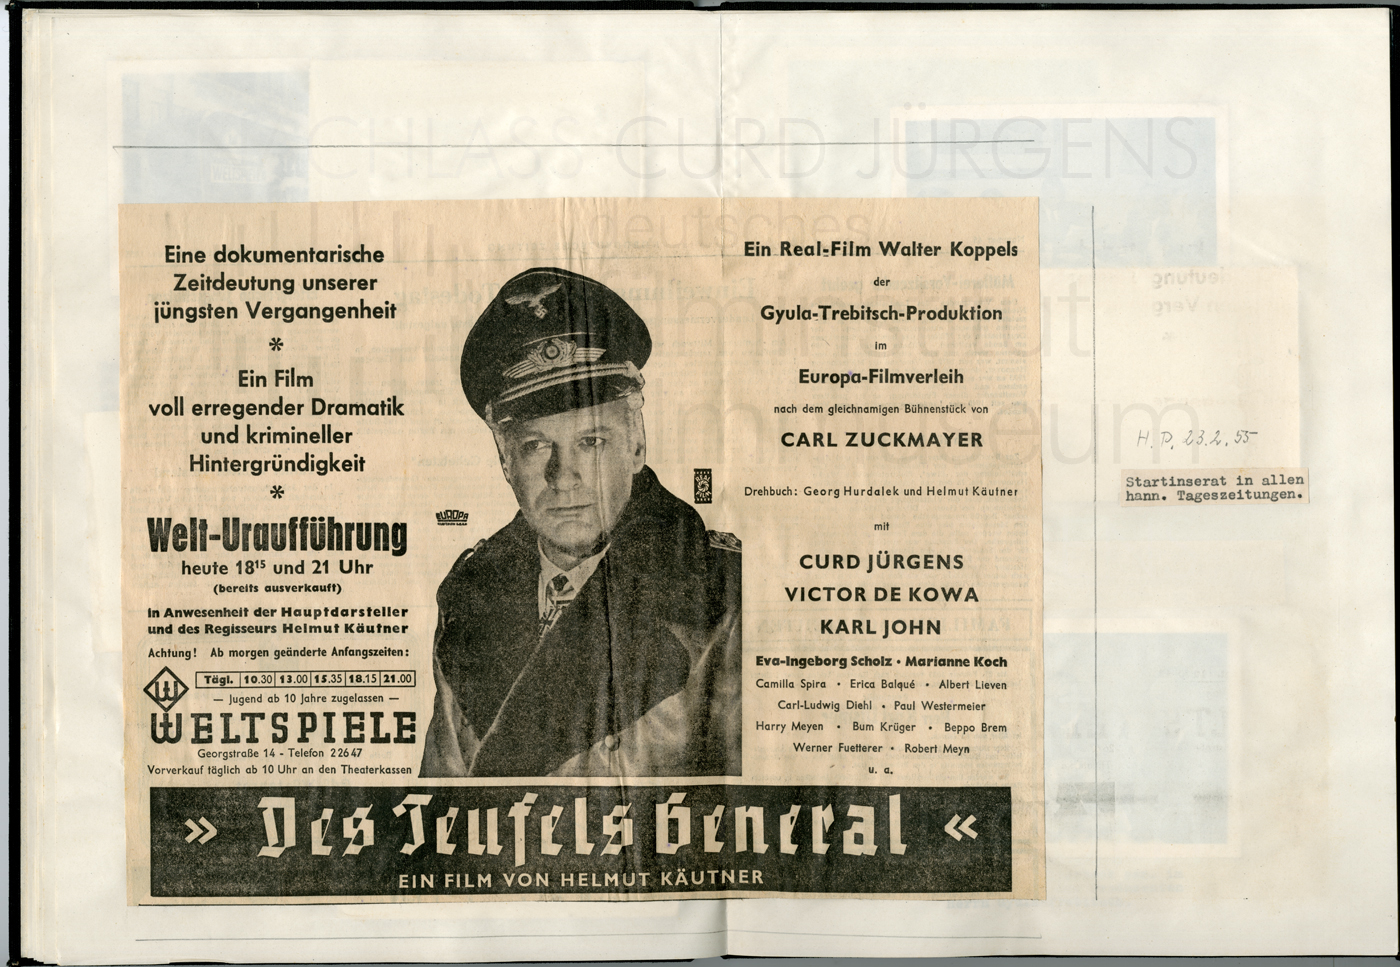 DES TEUFELS GENERAL (1955) Dokumentation der Werbemaßahmen, 23.2.1955, Hannover (Weltspiele)